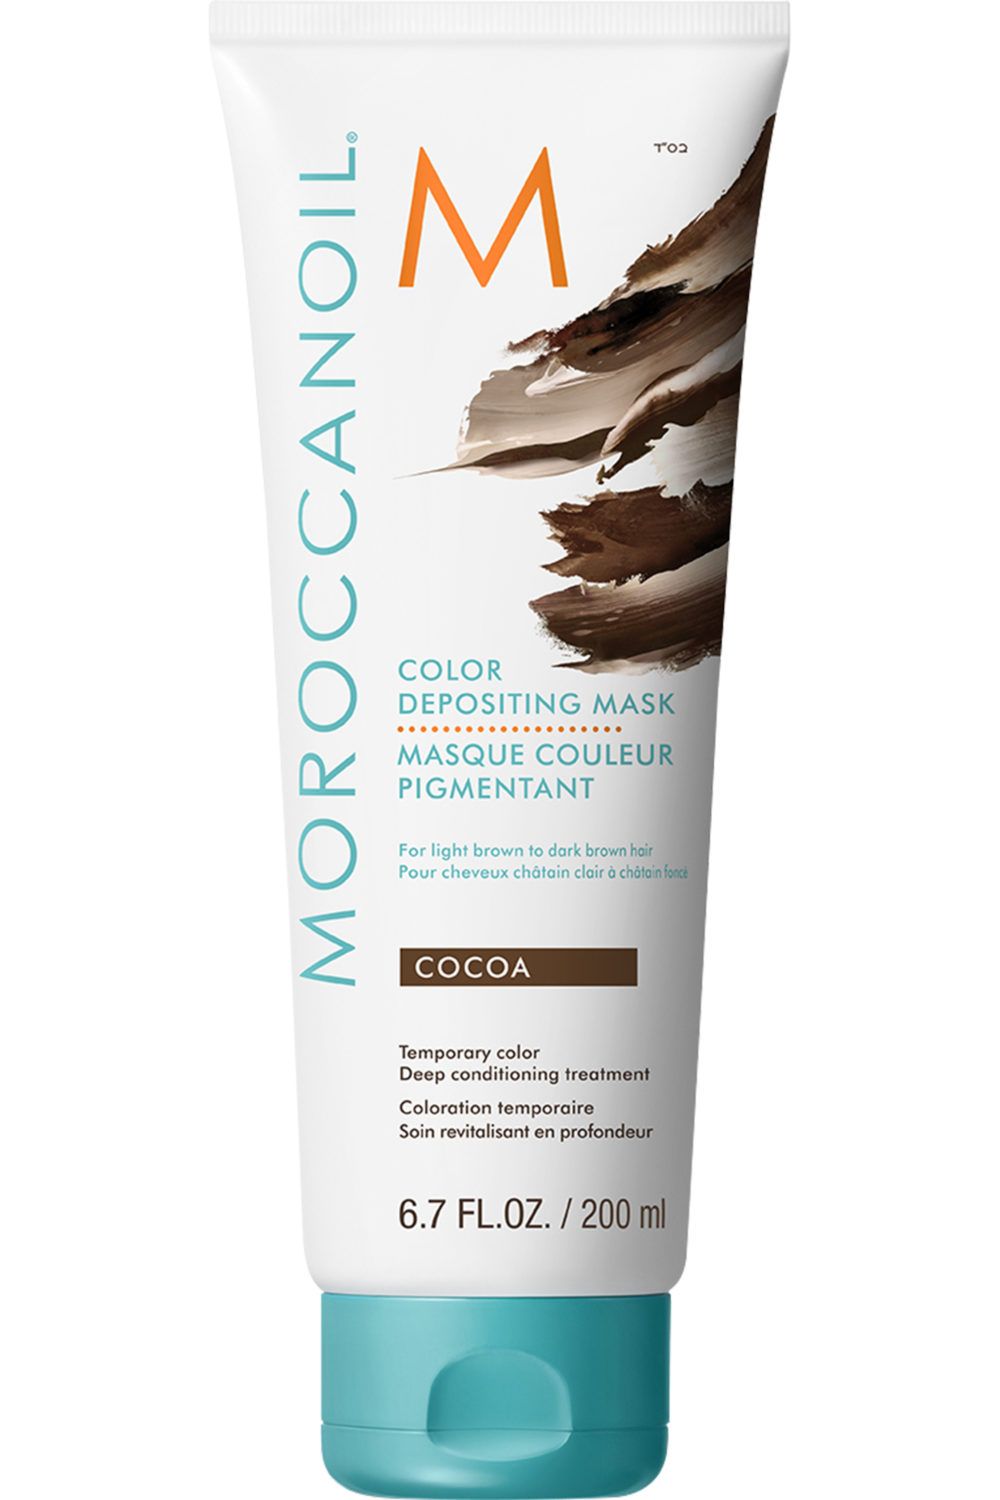 Moroccanoil - Masque couleur pigmentant Cacao 200ml